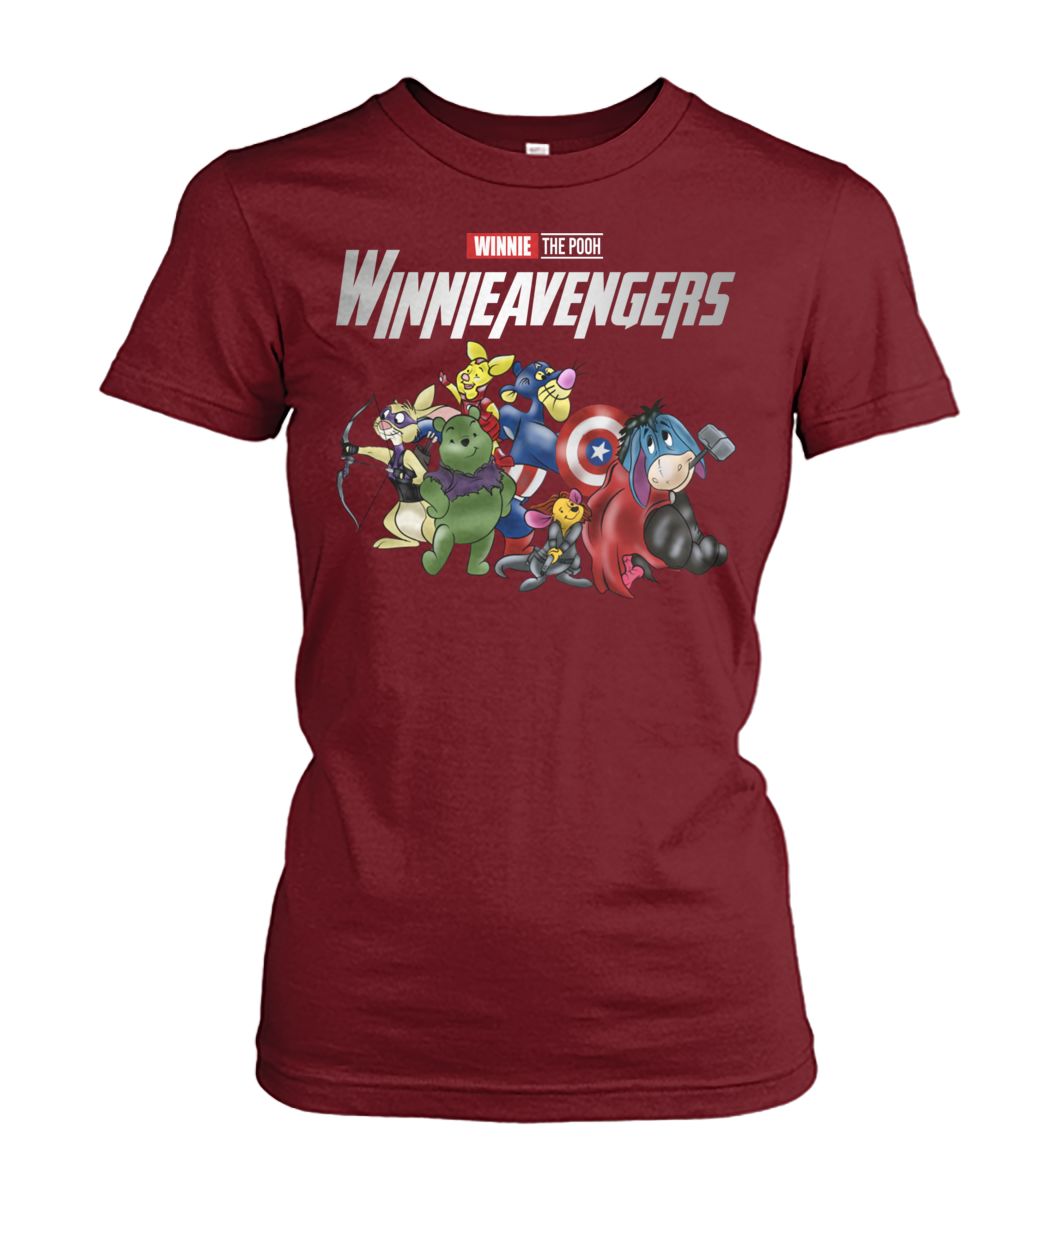 Marvel avengers endgame winnieavengers winnie the pooh women's crew tee